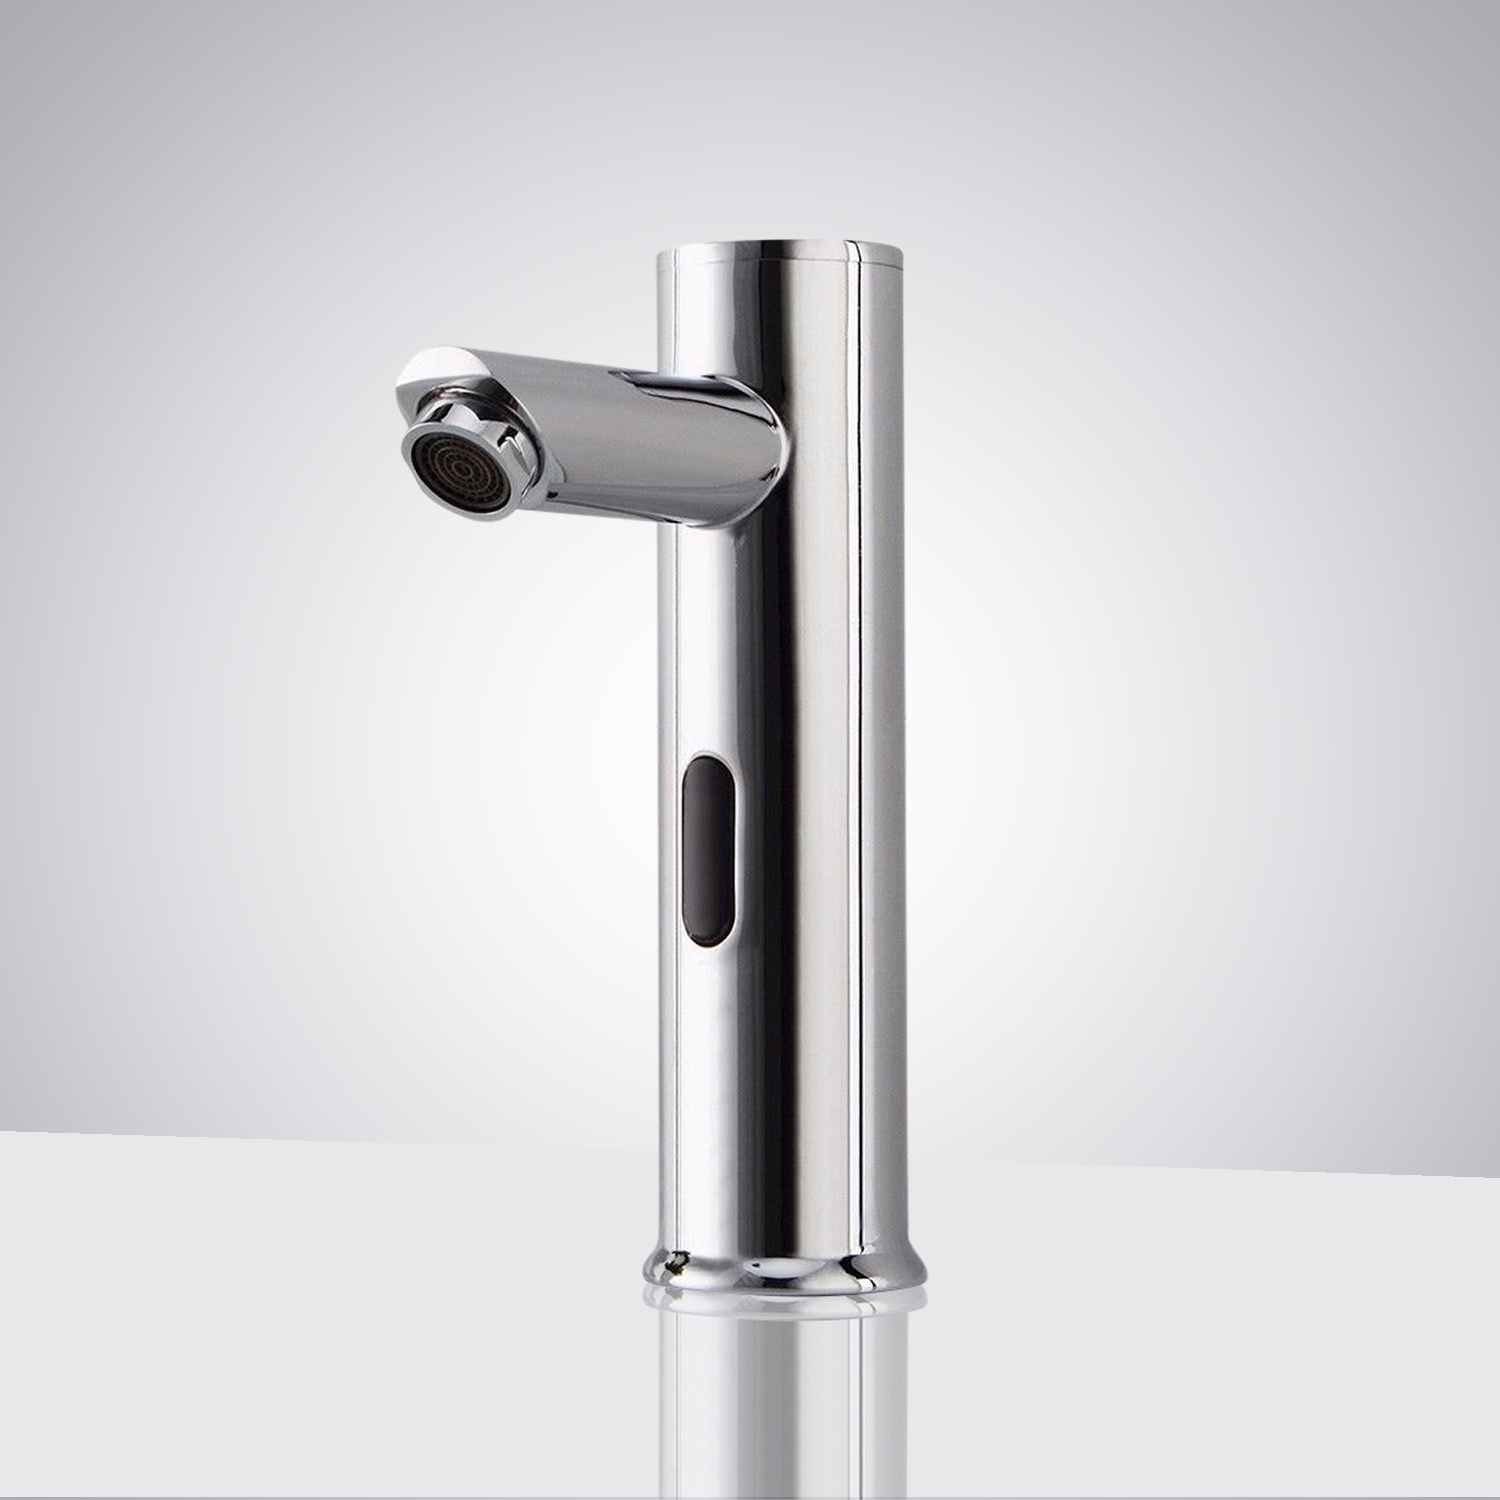 Fontana Sierra Commercial Automatic Touchless Sensor Faucet